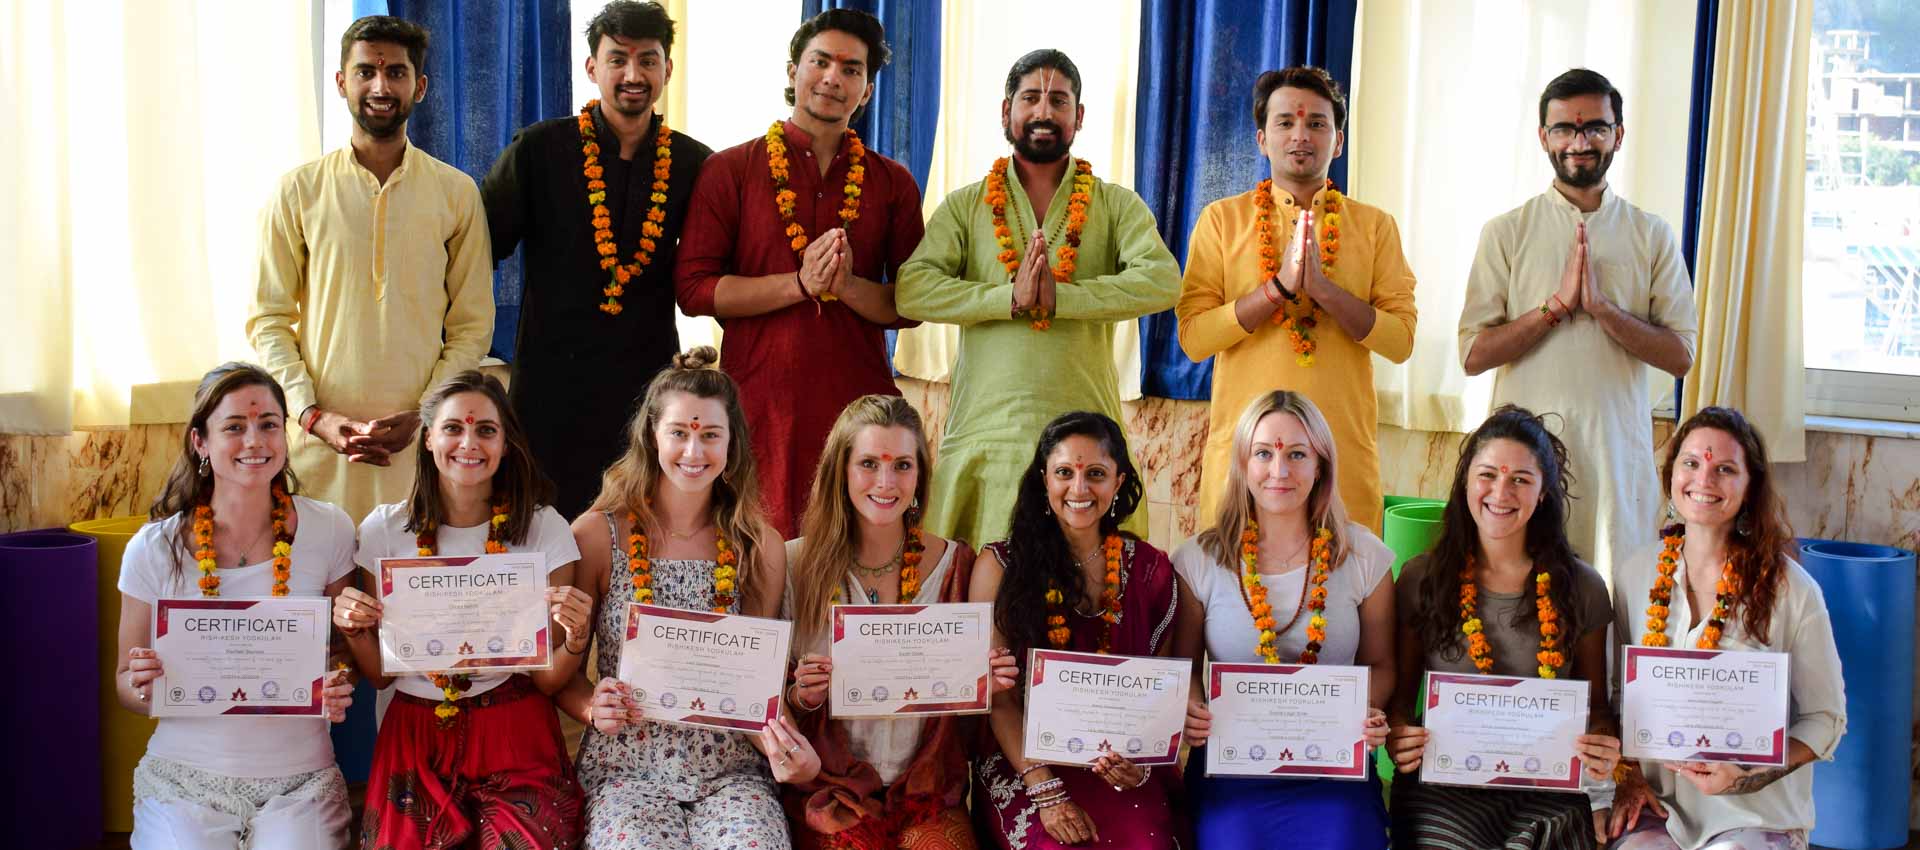 200 Hour Yoga Teacher Training in Rishikesh - September 2019, Dehradun, Uttarakhand, India